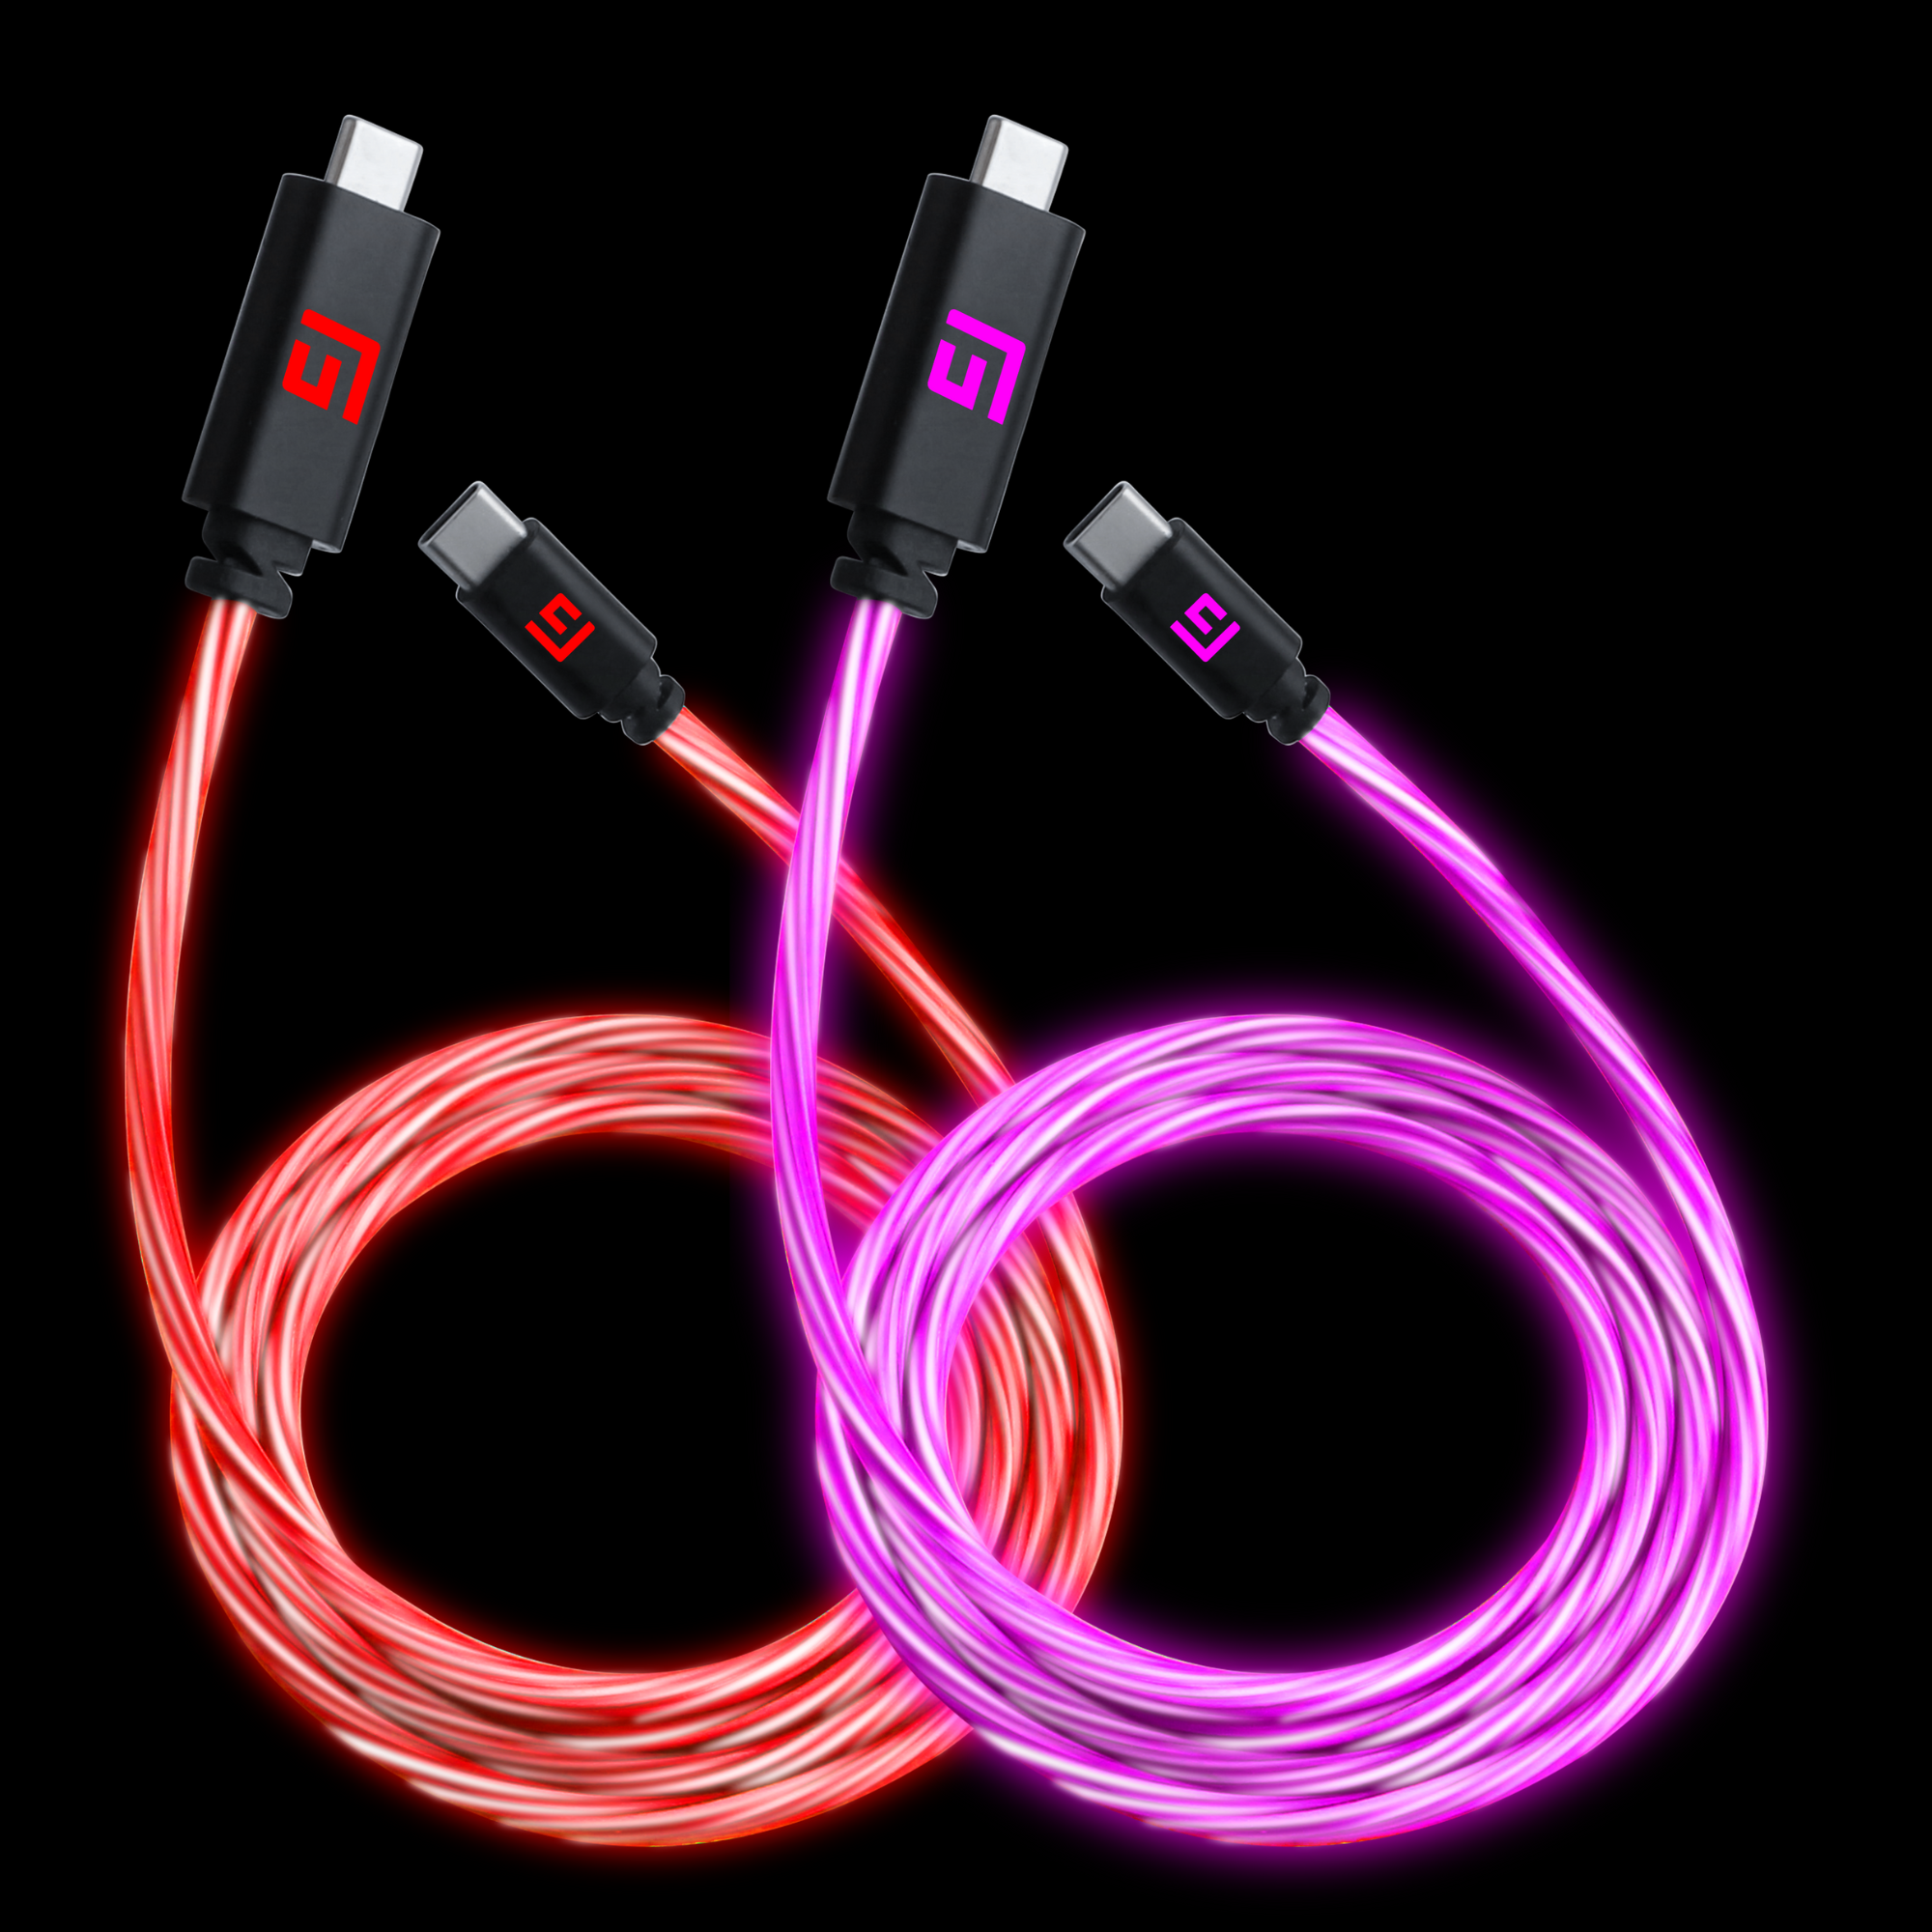 1,5M/5ft LED USB-C/USB-C Kabel | Hochgeschwindigkeitsladen + Synchronisieren (2er-Pack)